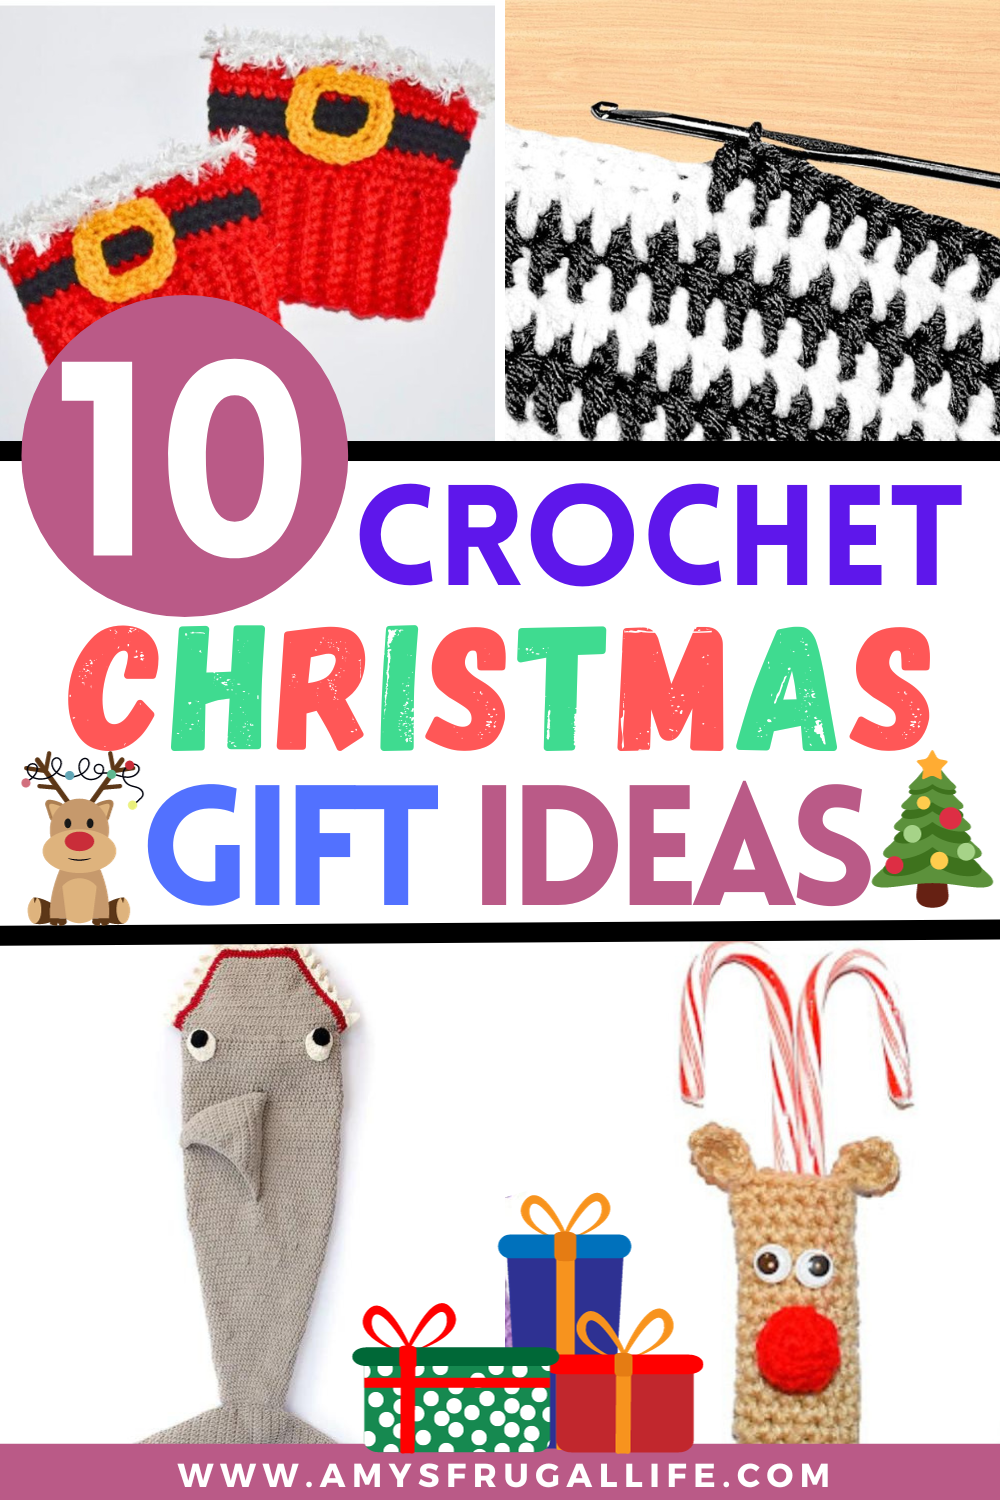 How to Crochet a Christmas Tree Ornament